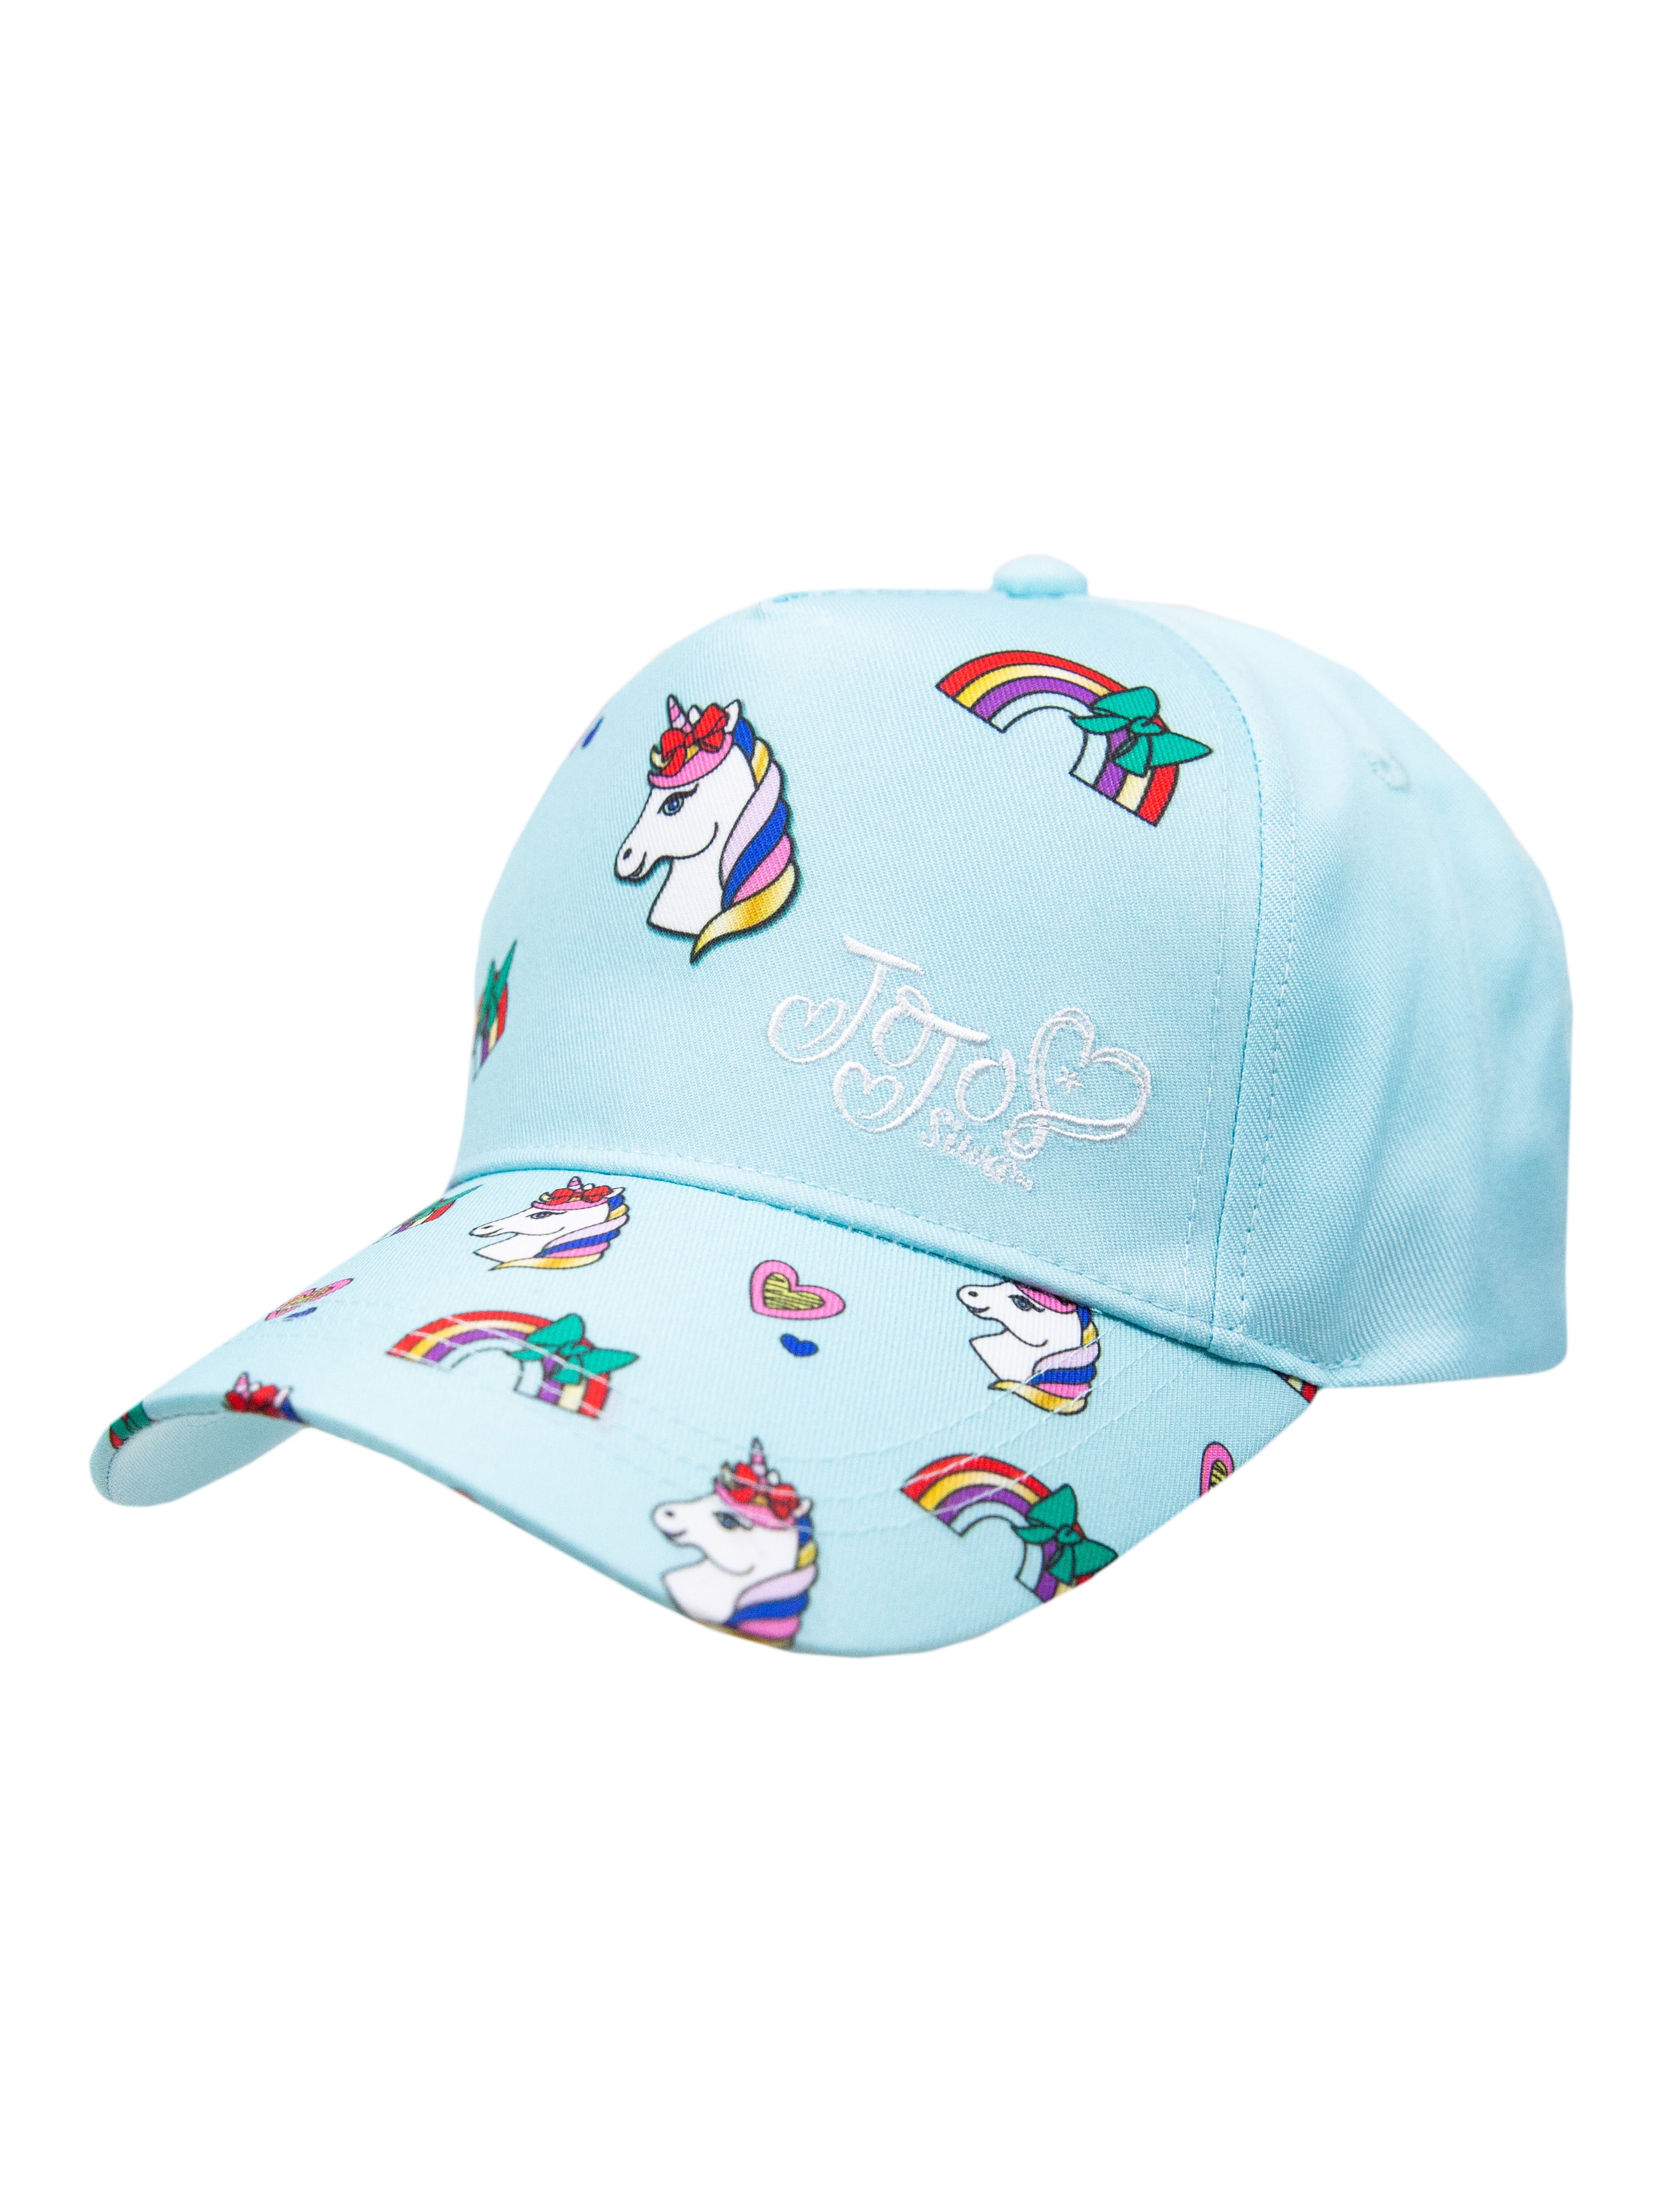 Jojo Siwa Girls Licensed Baseball Hat Blue with Unicorn Print